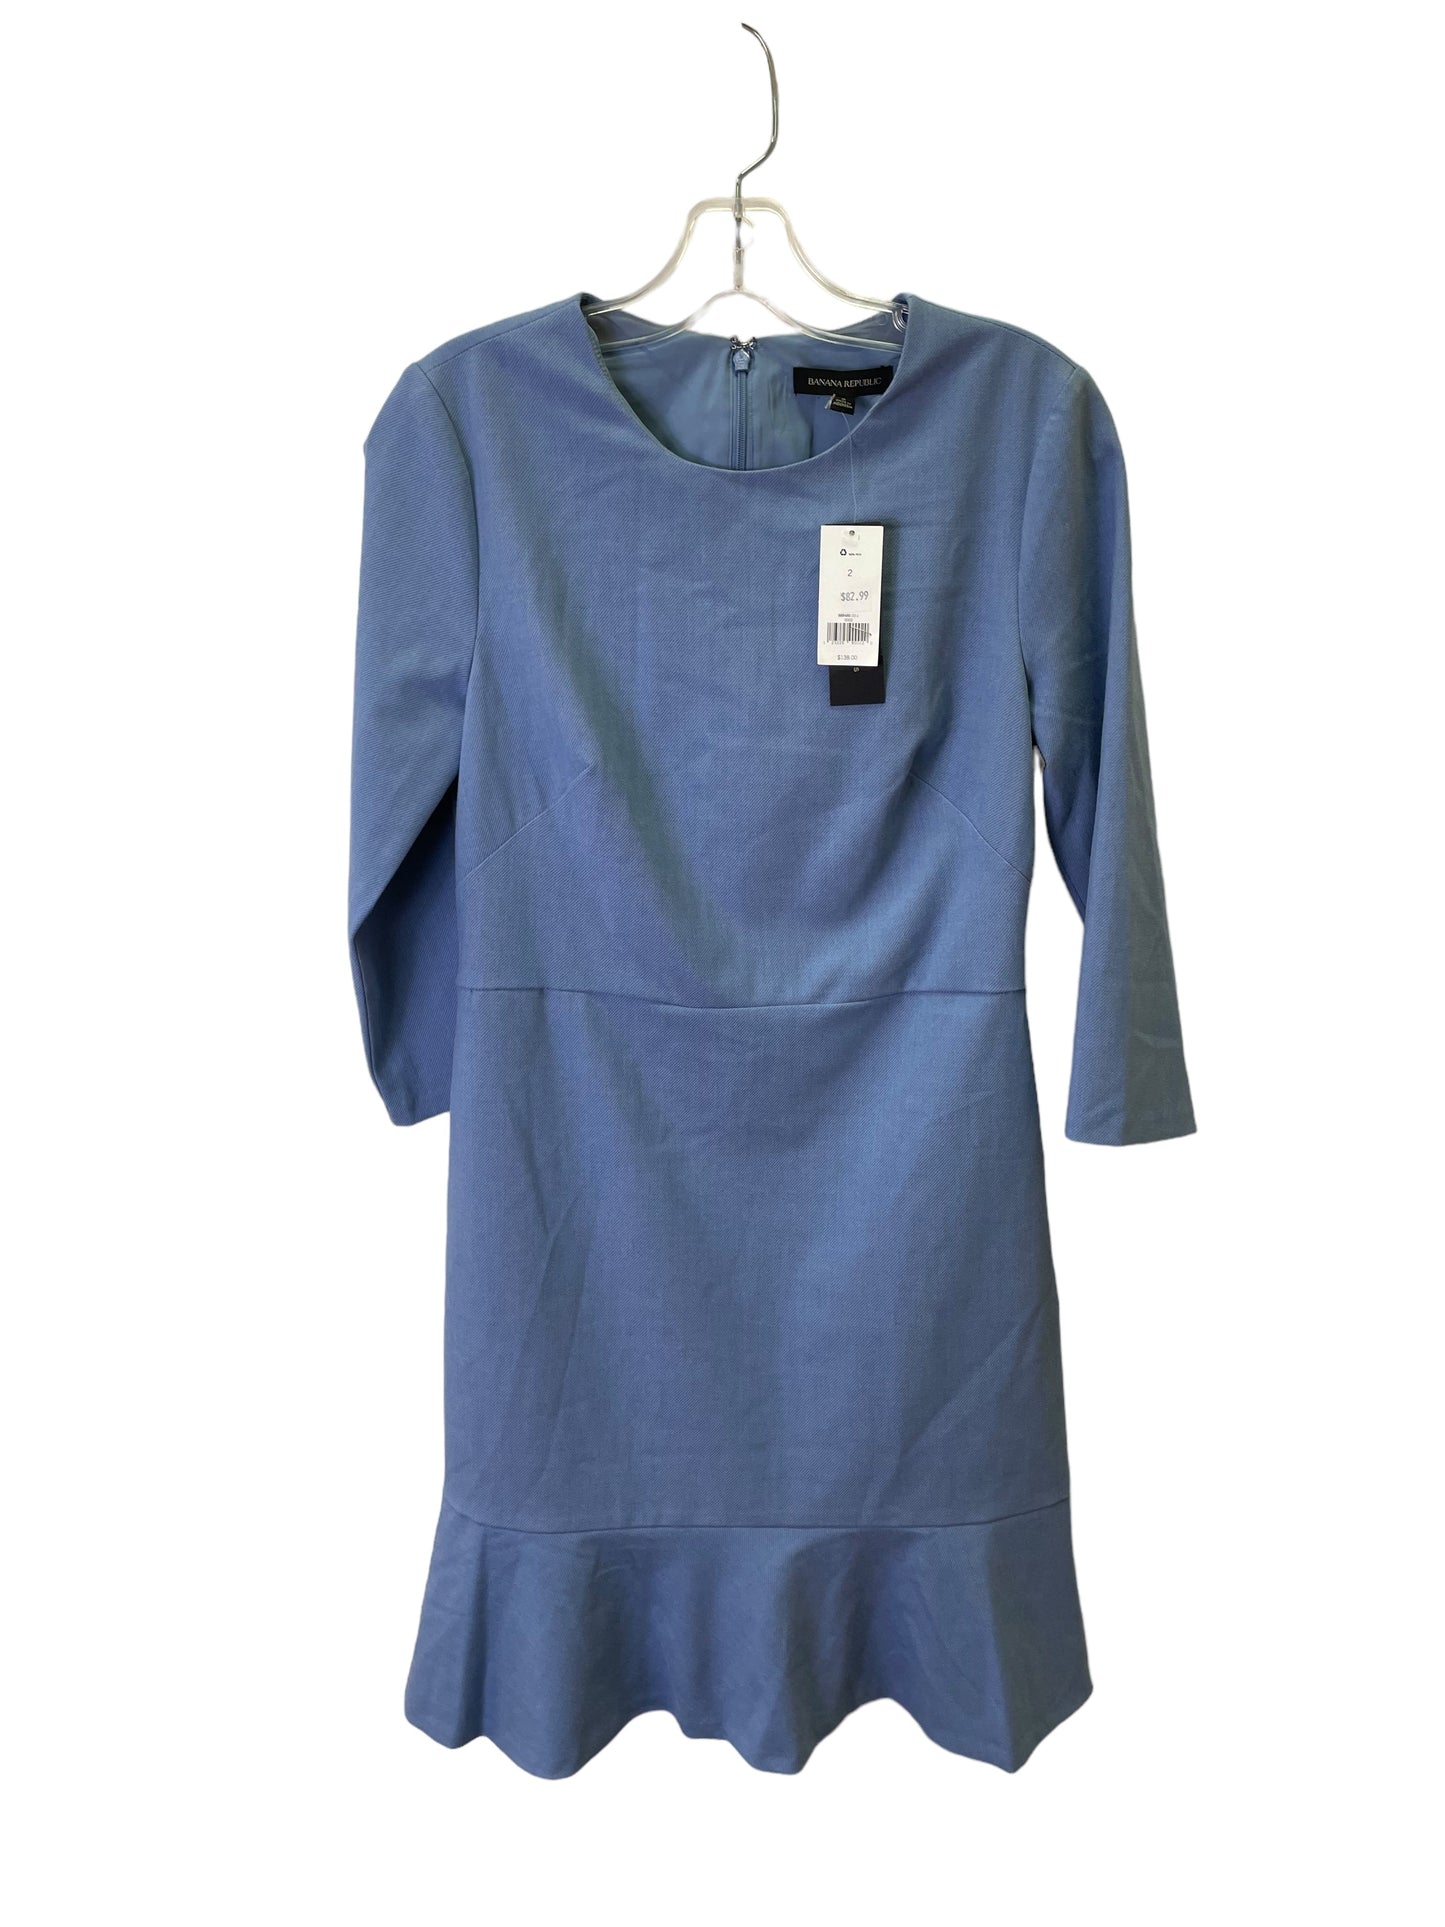 Blue Dress Casual Short By Banana Republic, Size: Xs